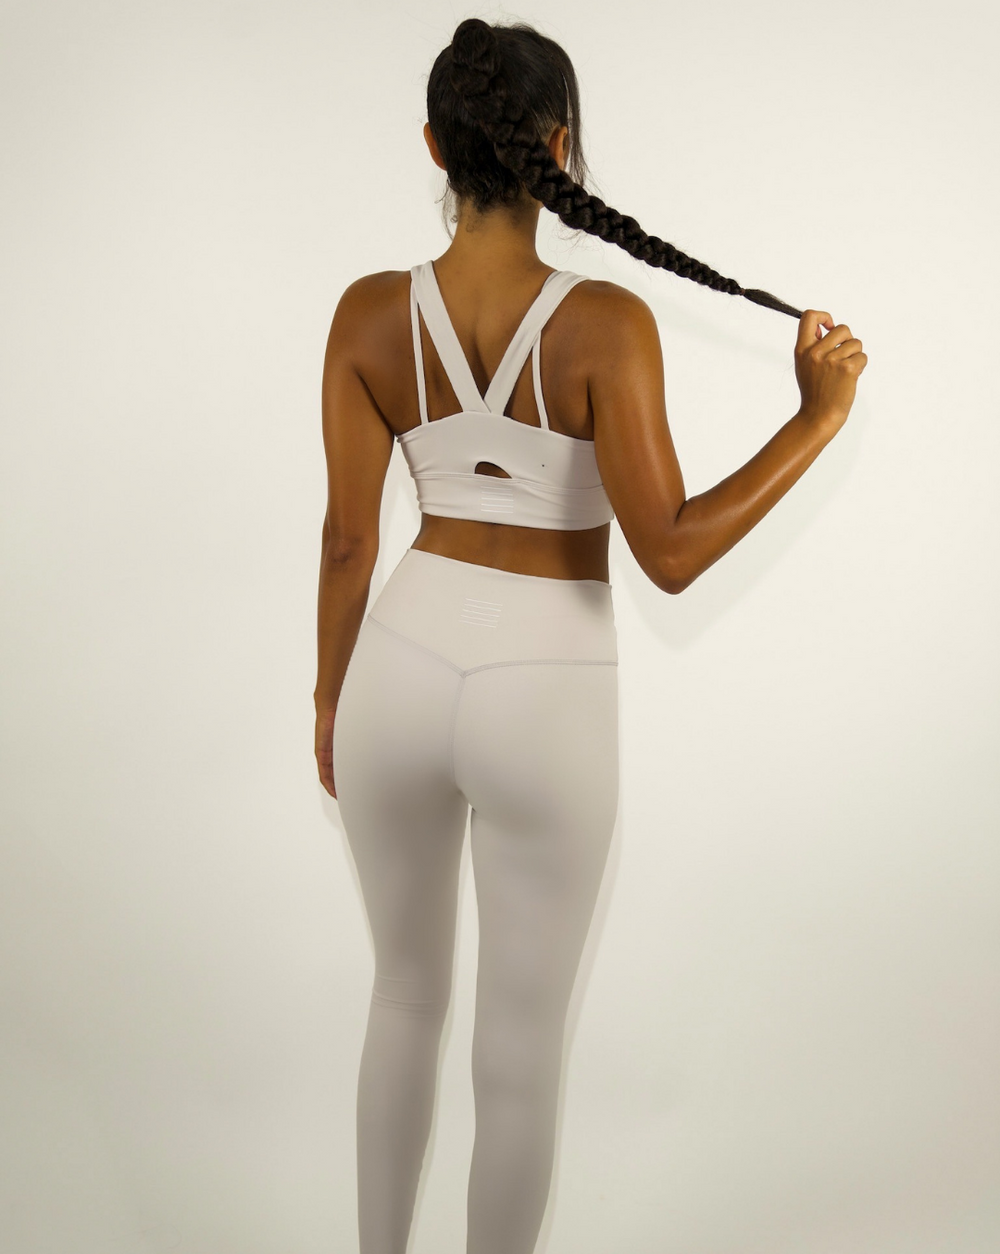 QIFEILA Girls Yoga Pants Size 14-16 with Pockets Fitness Women